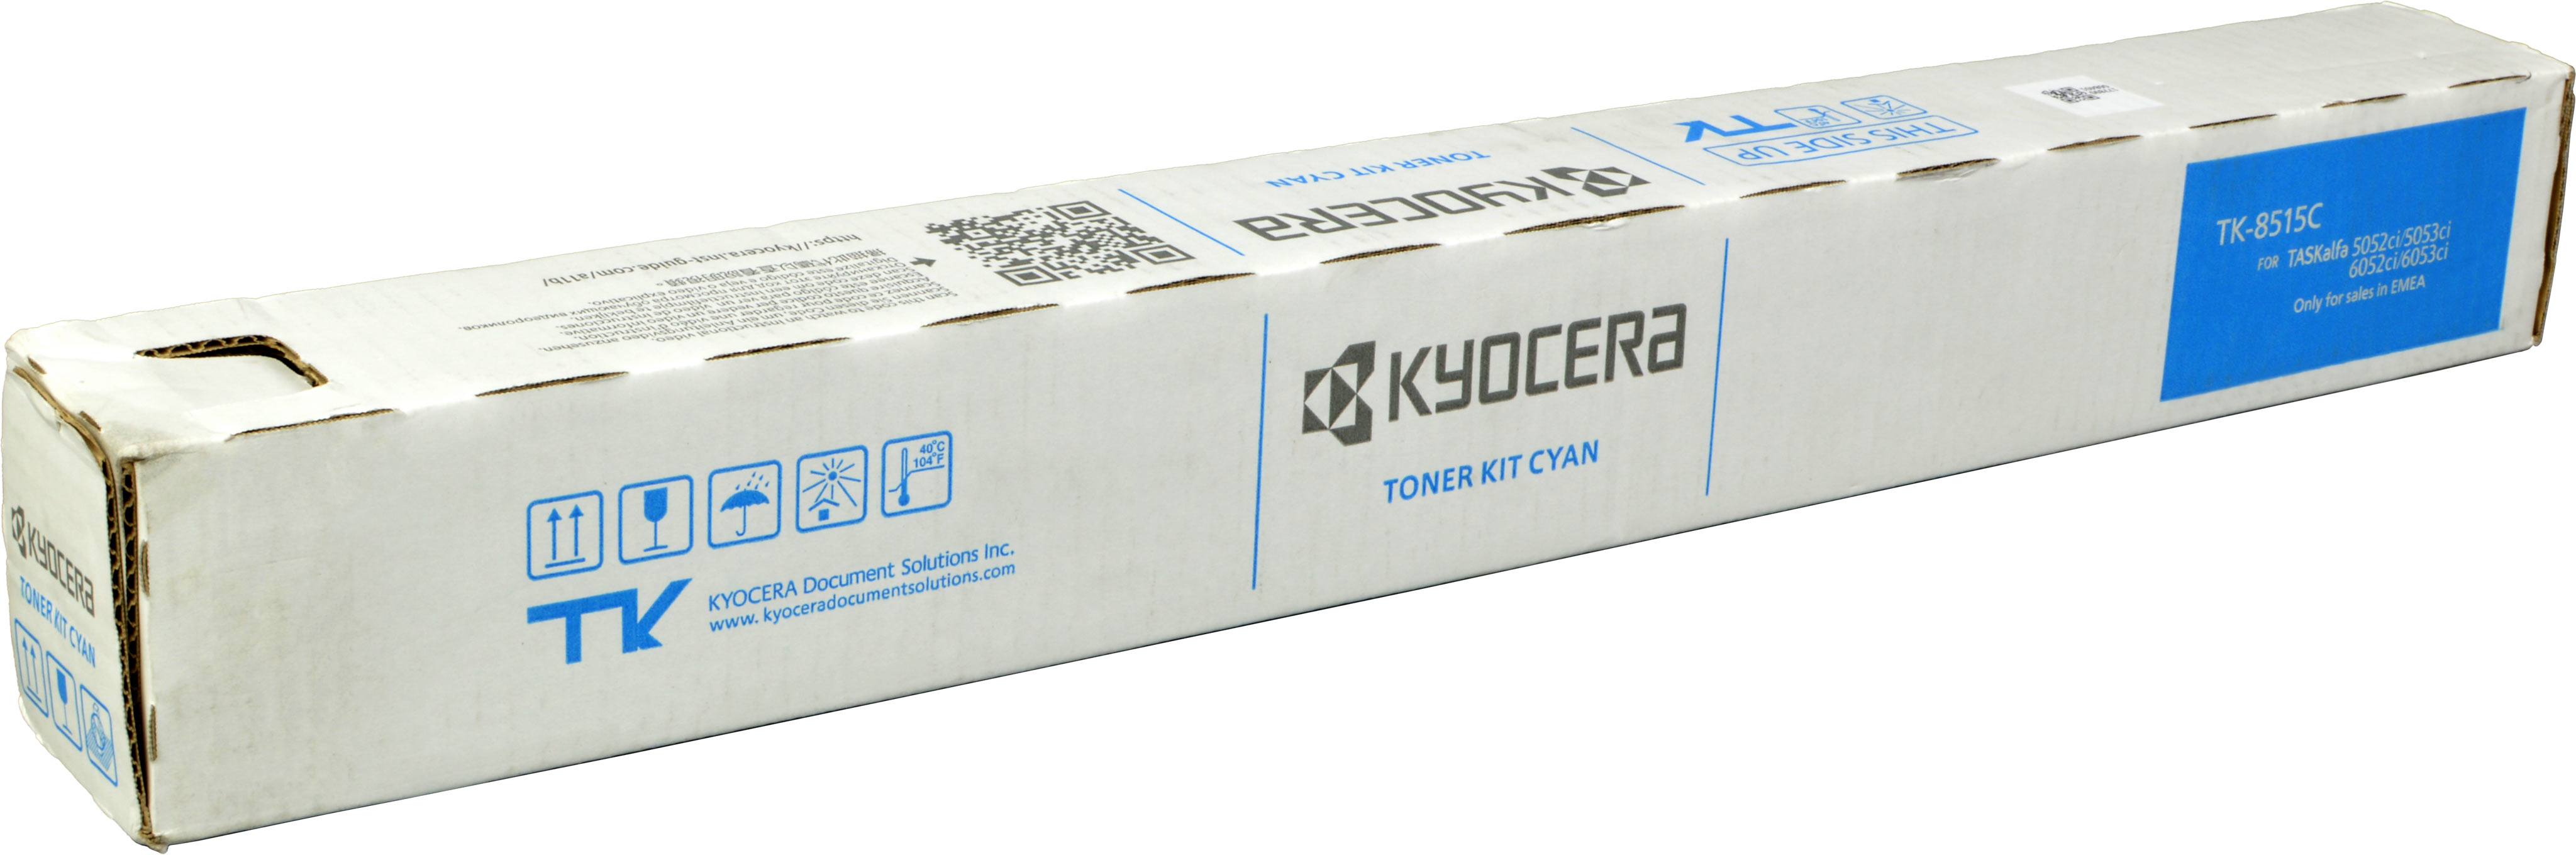 Kyocera Toner TK-8515C  1T02NDCNL0  cyan